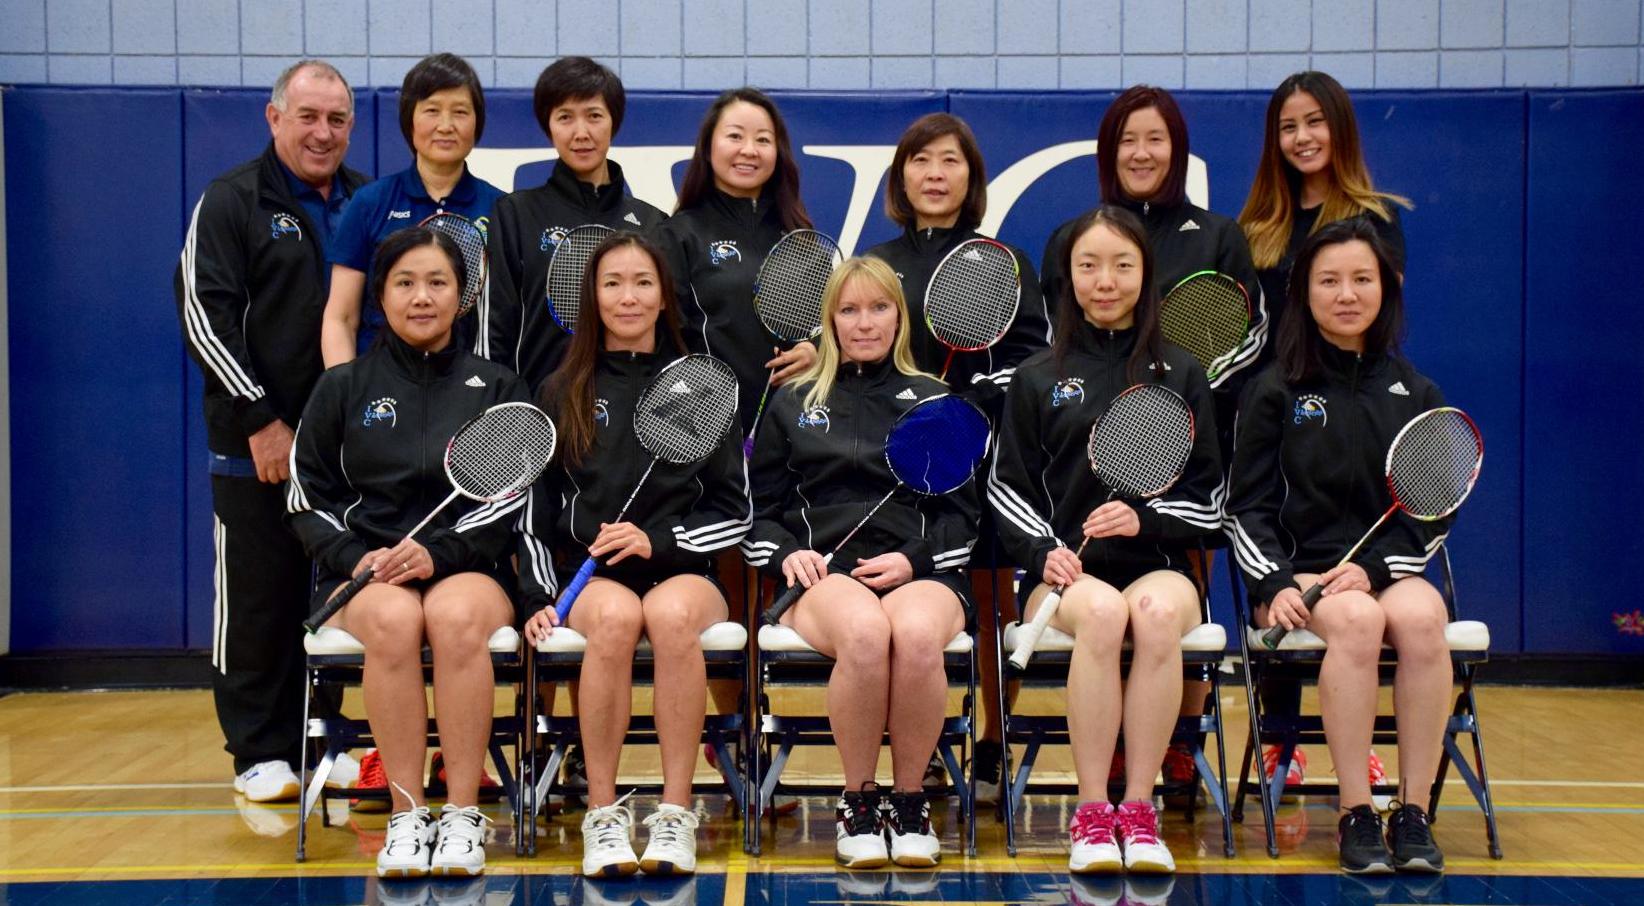 Women's badminton team completes undefeated regular season